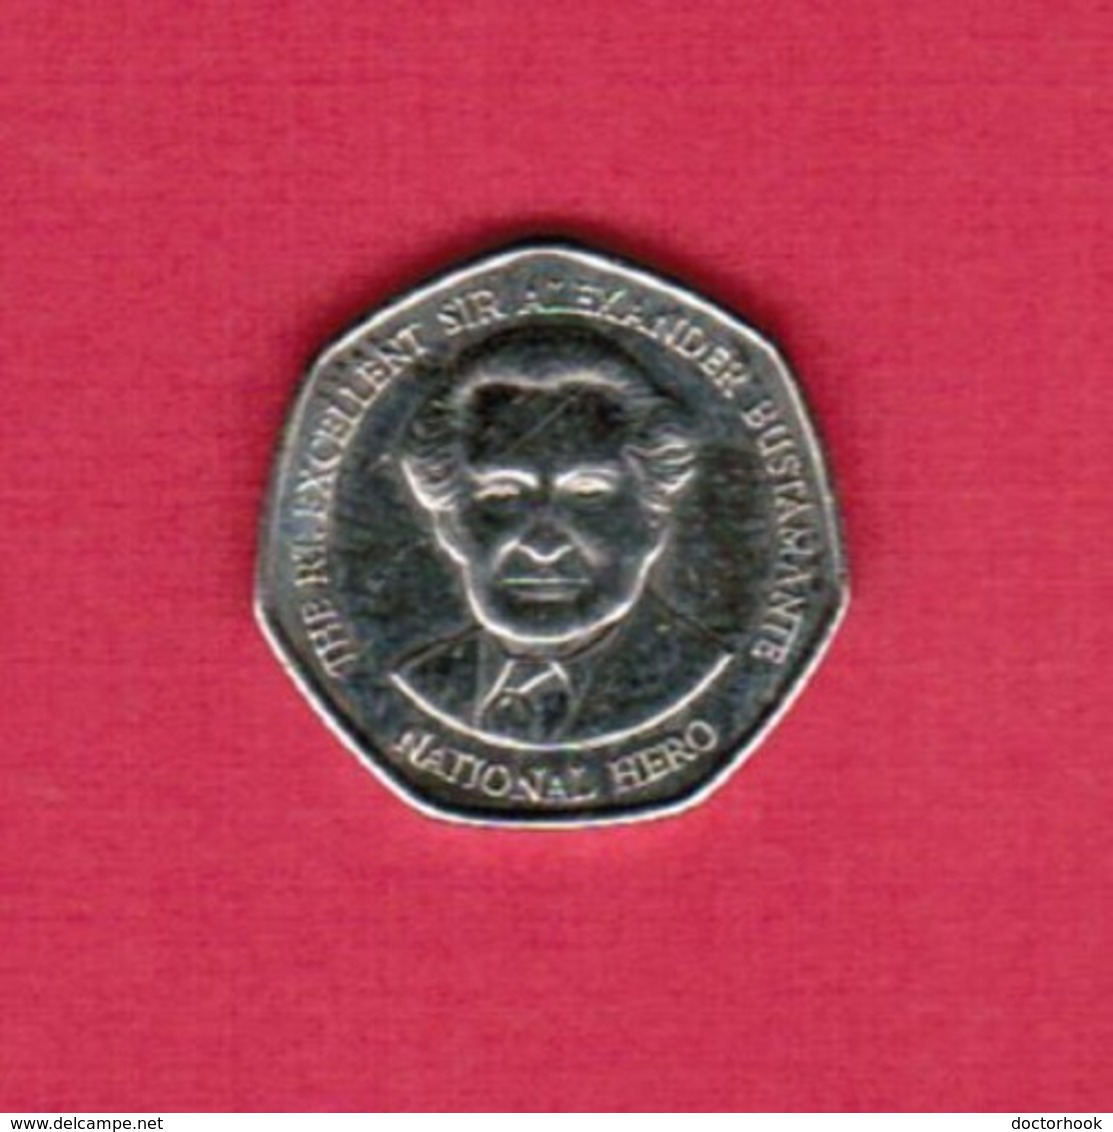 JAMAICA   $1.00 DOLLAR 2003 (KM # 164) #5233 - Jamaica